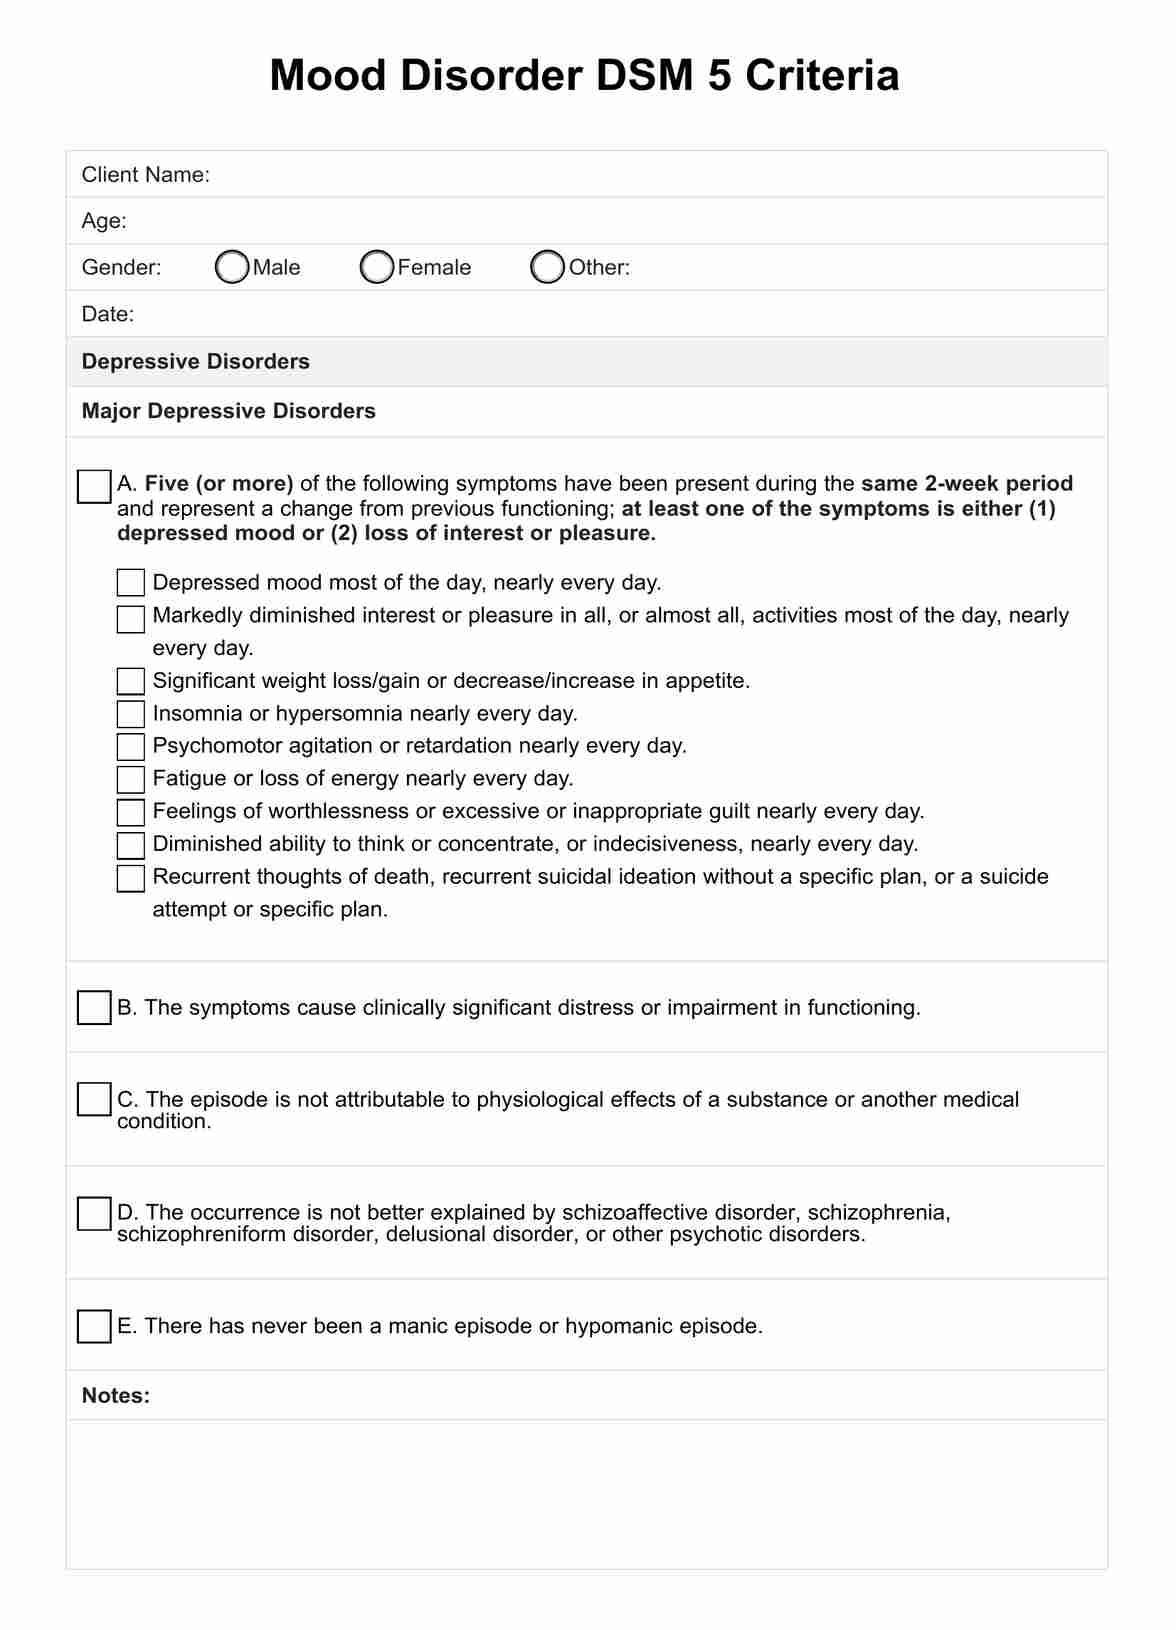 Mood Disorder DSM 5 Criteria PDF Example